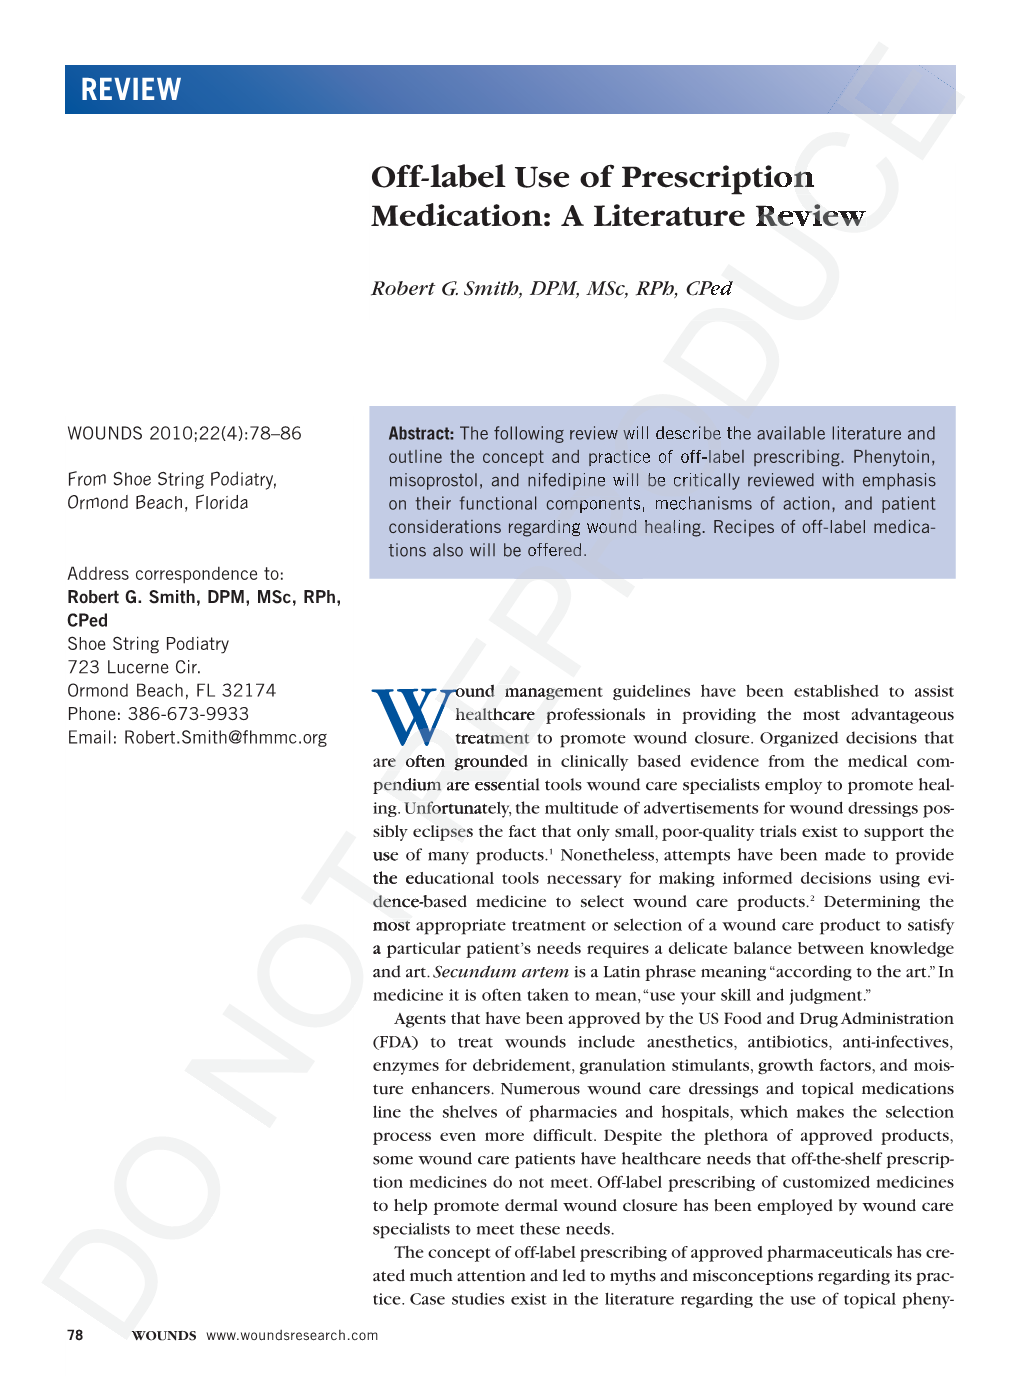 Off-Label Use of Prescription Medication: a Literature Review